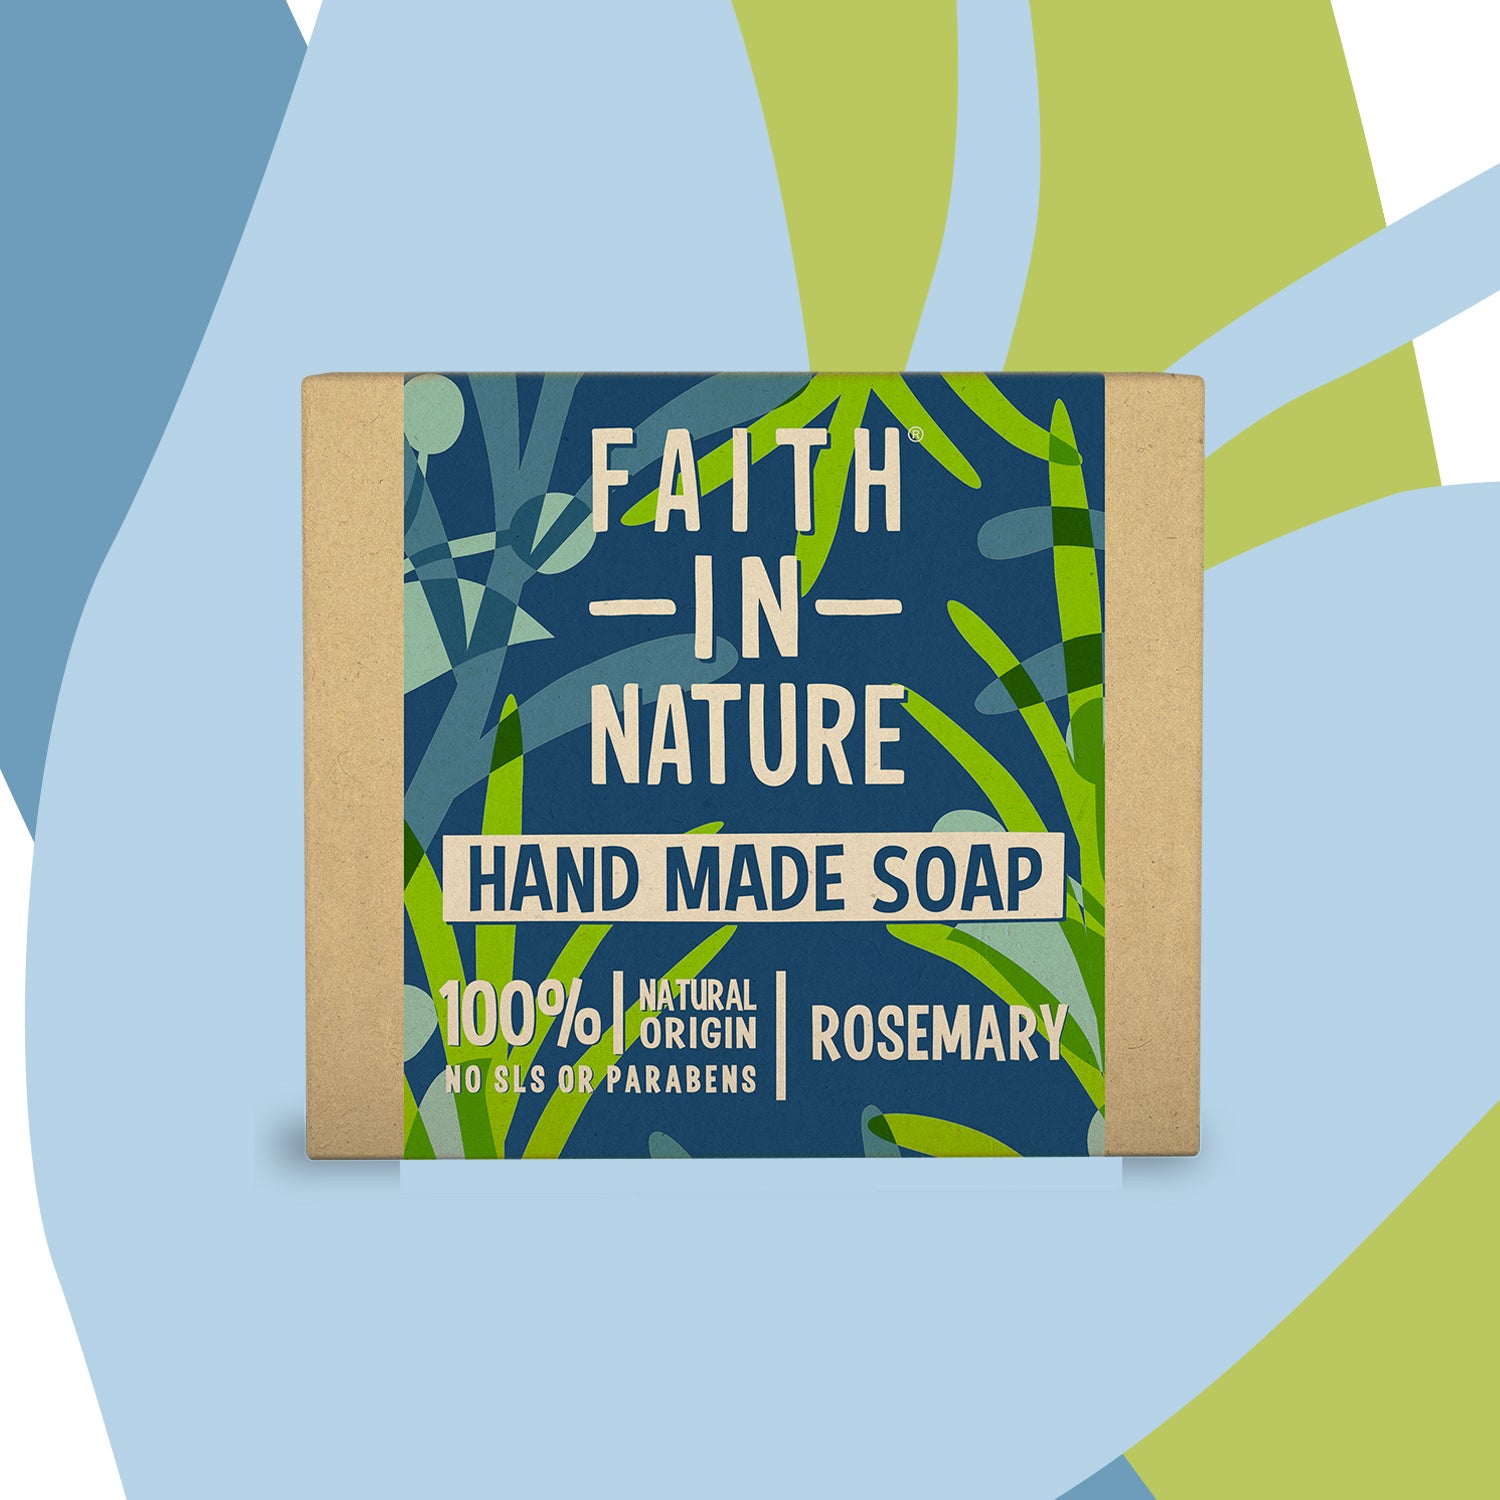 Faith in Nature Boxed Soap 100g - Rosemary